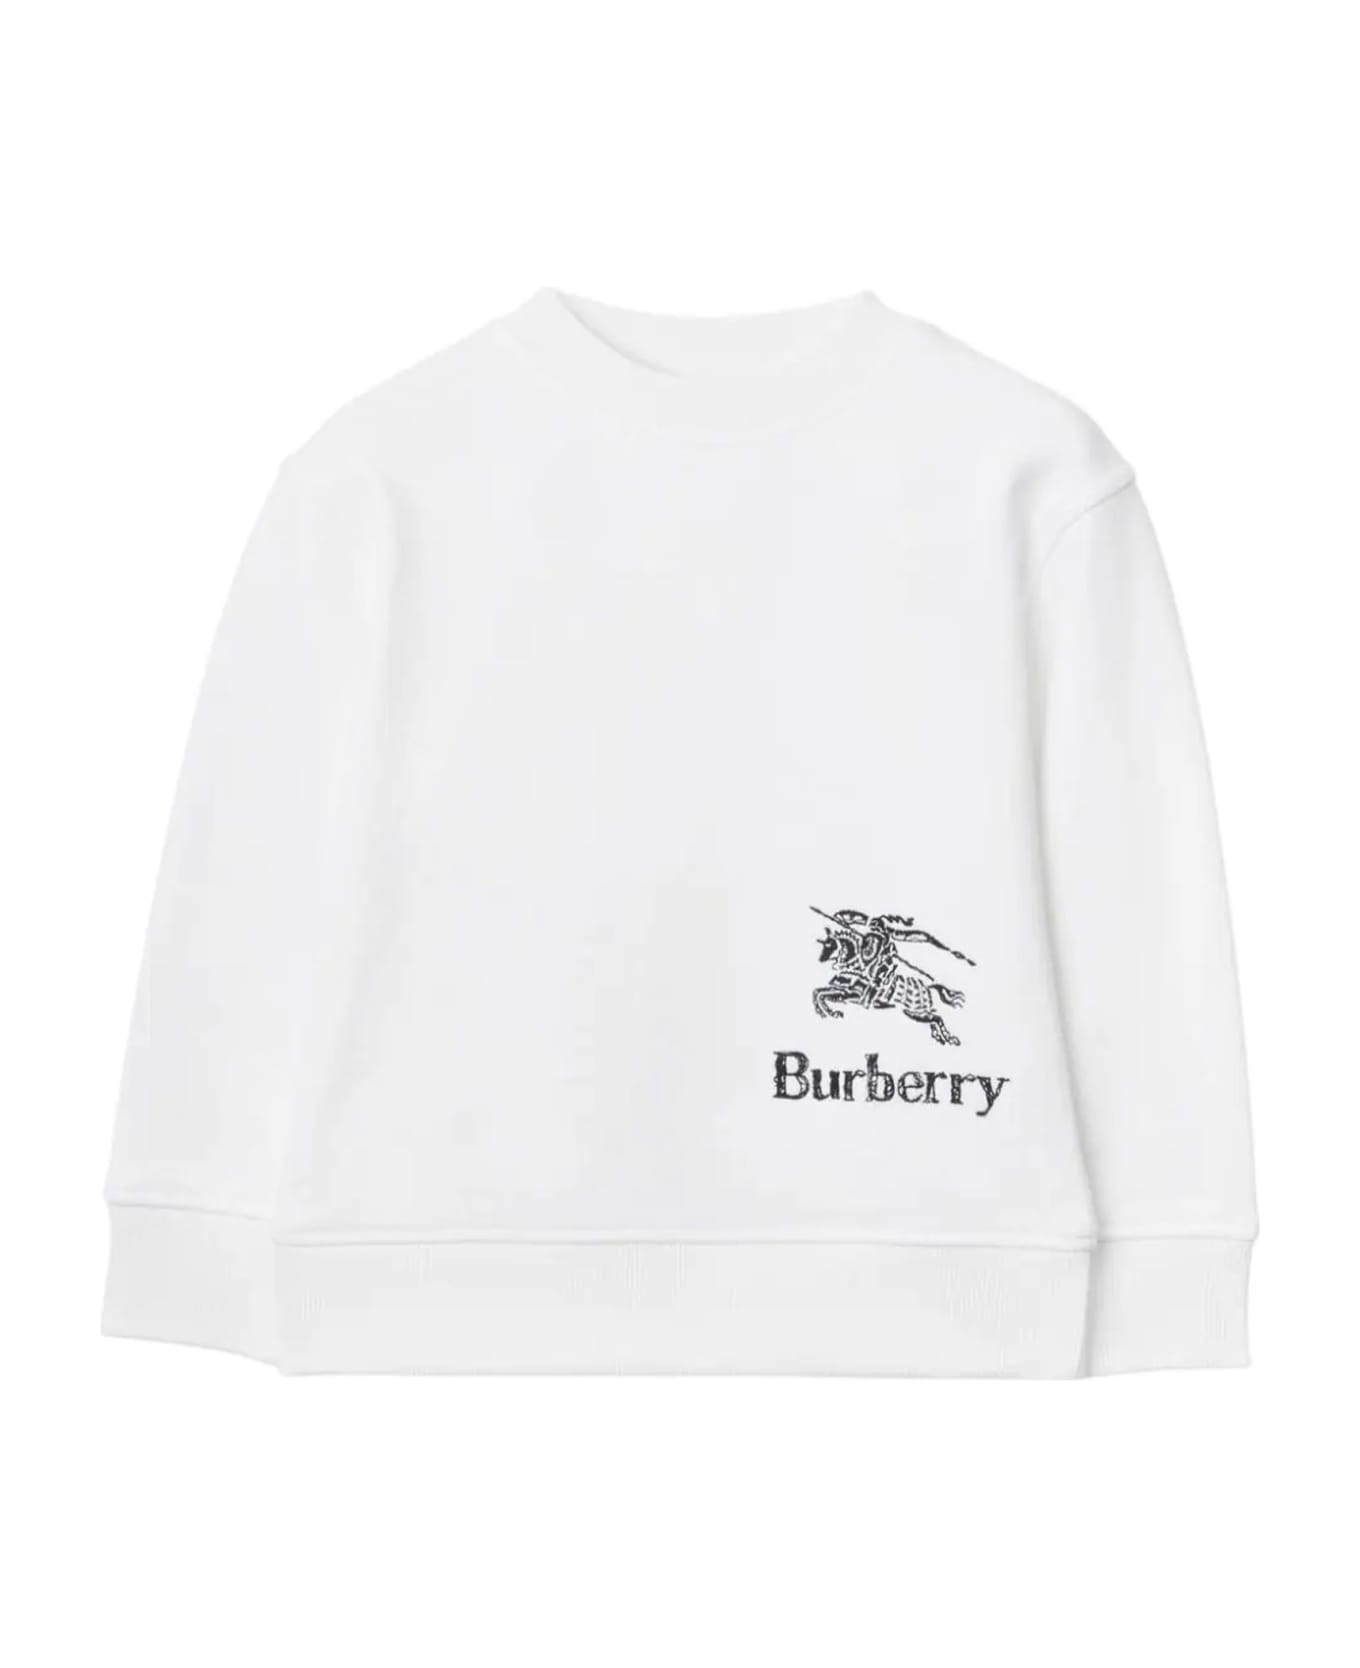 Burberry Kids Sweaters White - White us